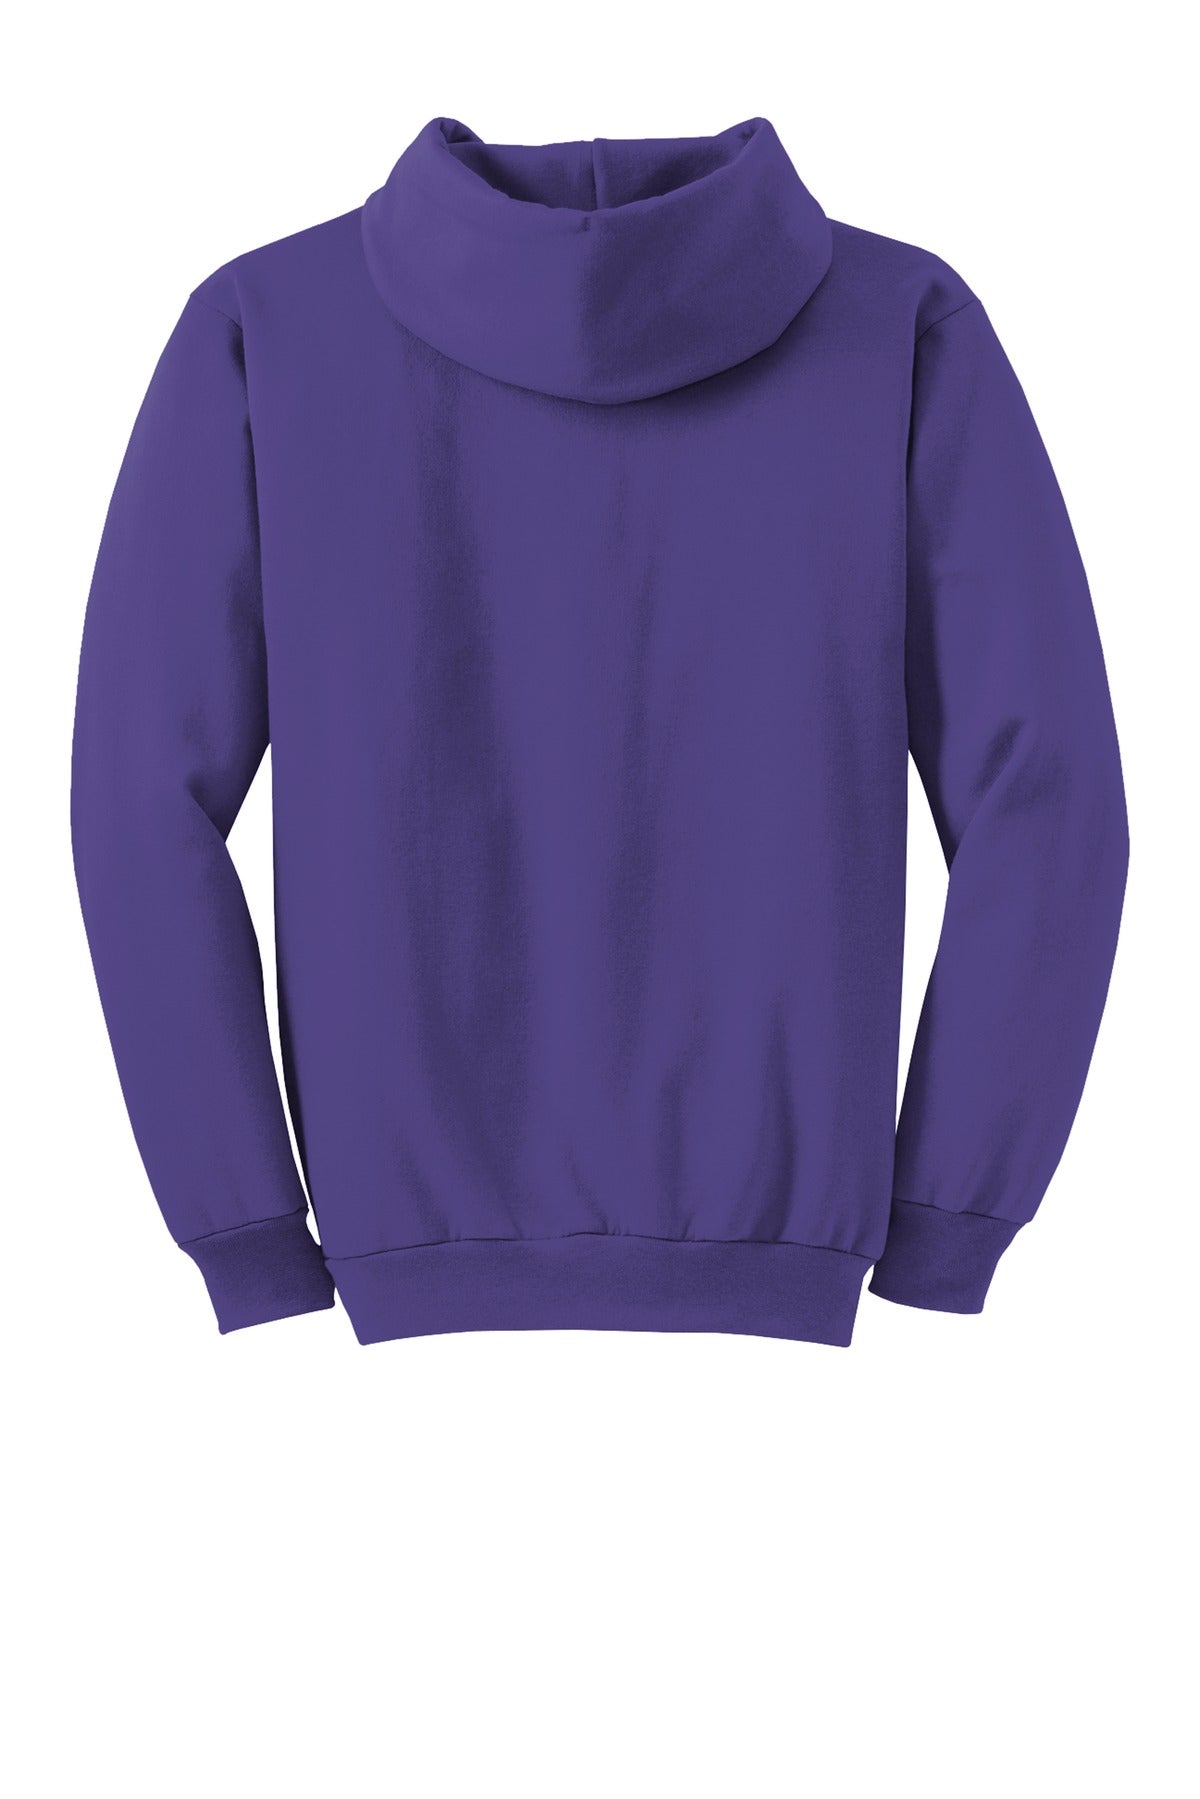 Port & Company Tall Essential Fleece Pullover Hooded Sweatshirt. PC90HT